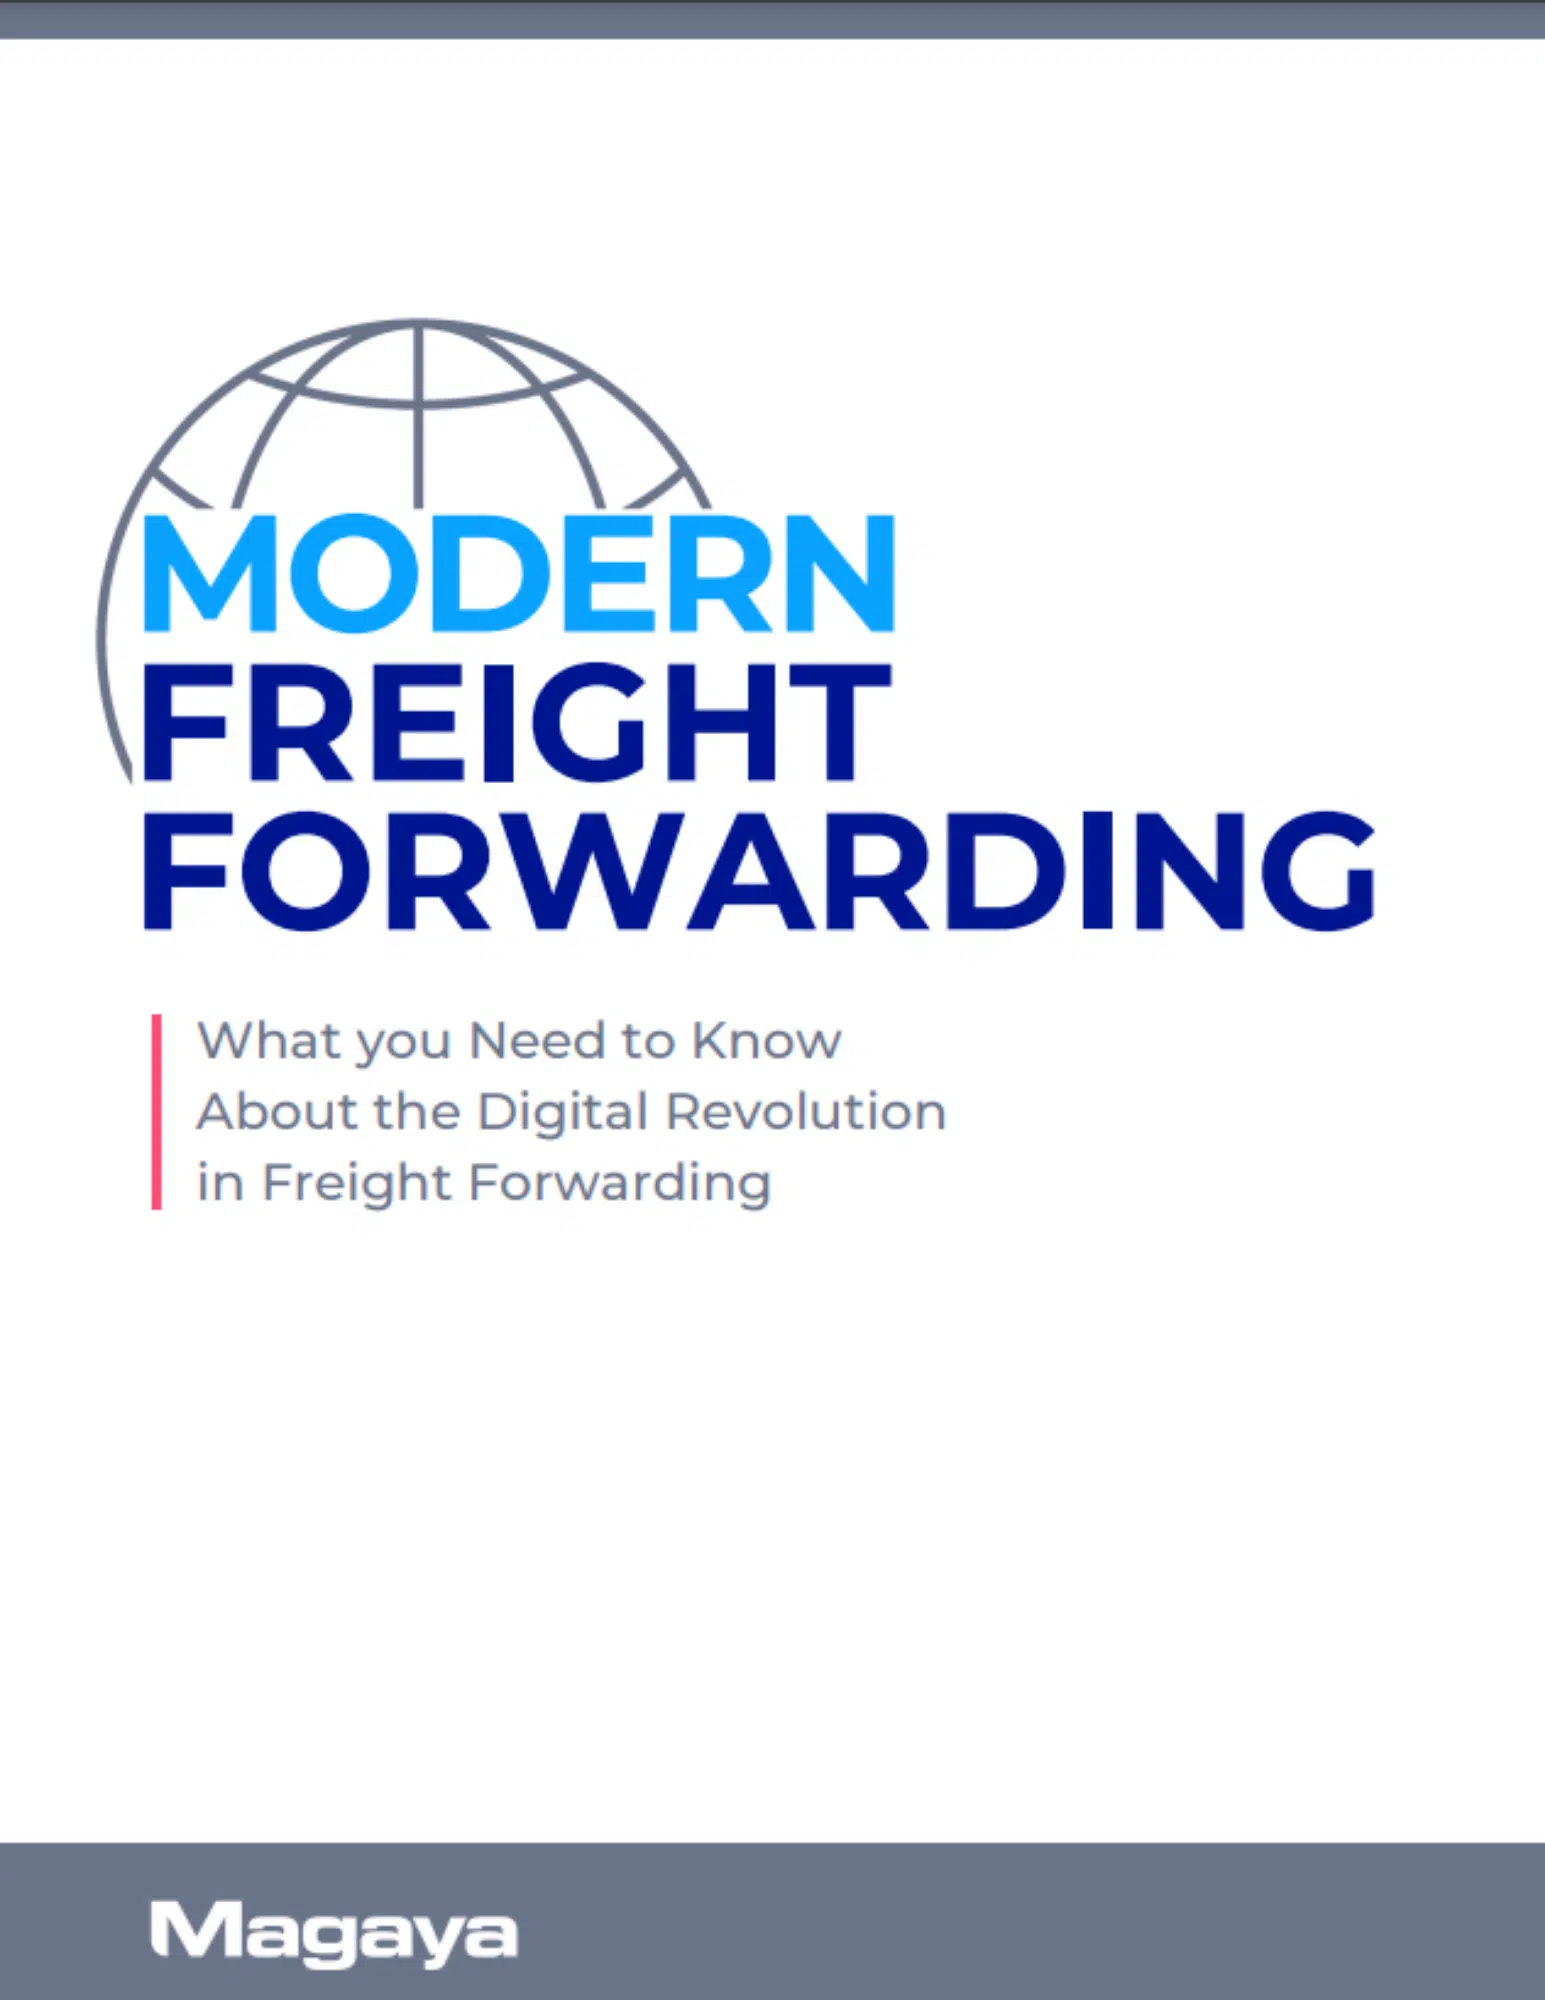 Modern Freight Forwarding Guide